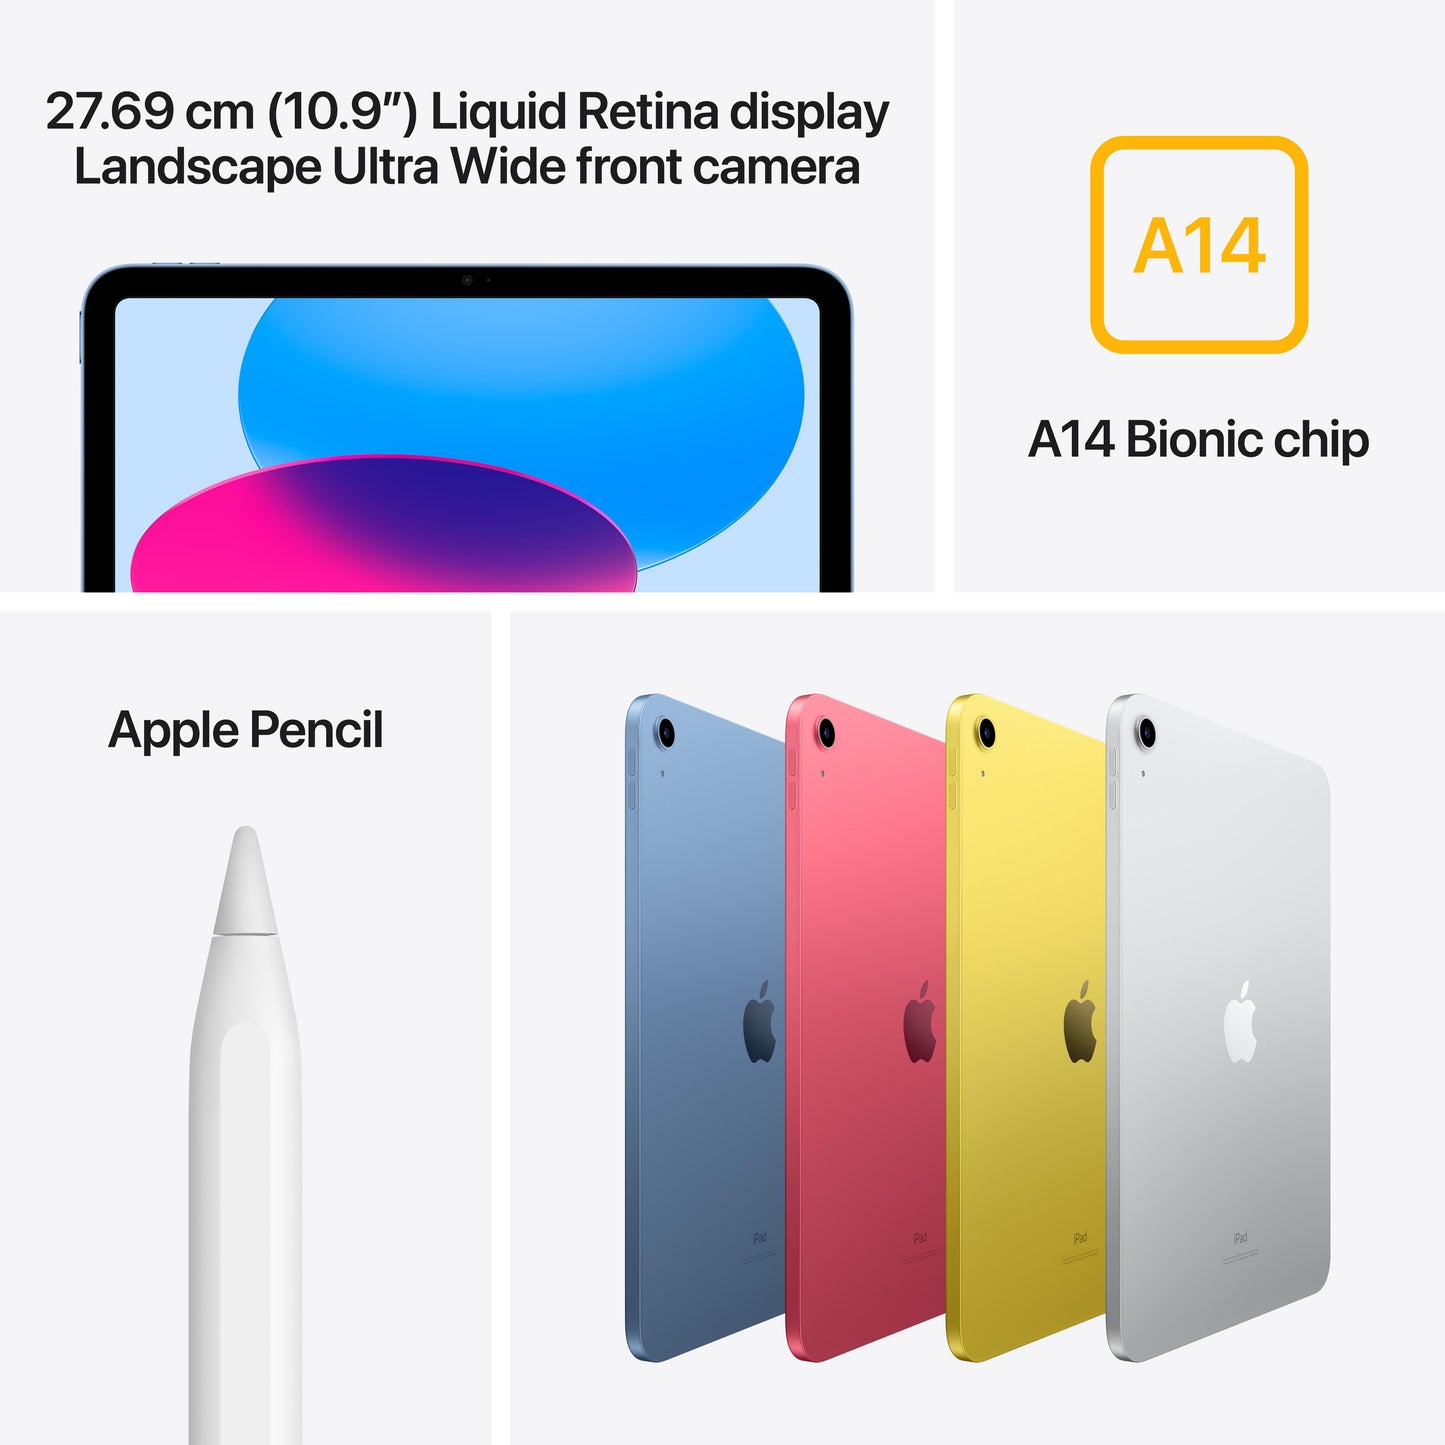 2022 10.9-inch iPad Wi-Fi 256GB - Pink (10th generation)